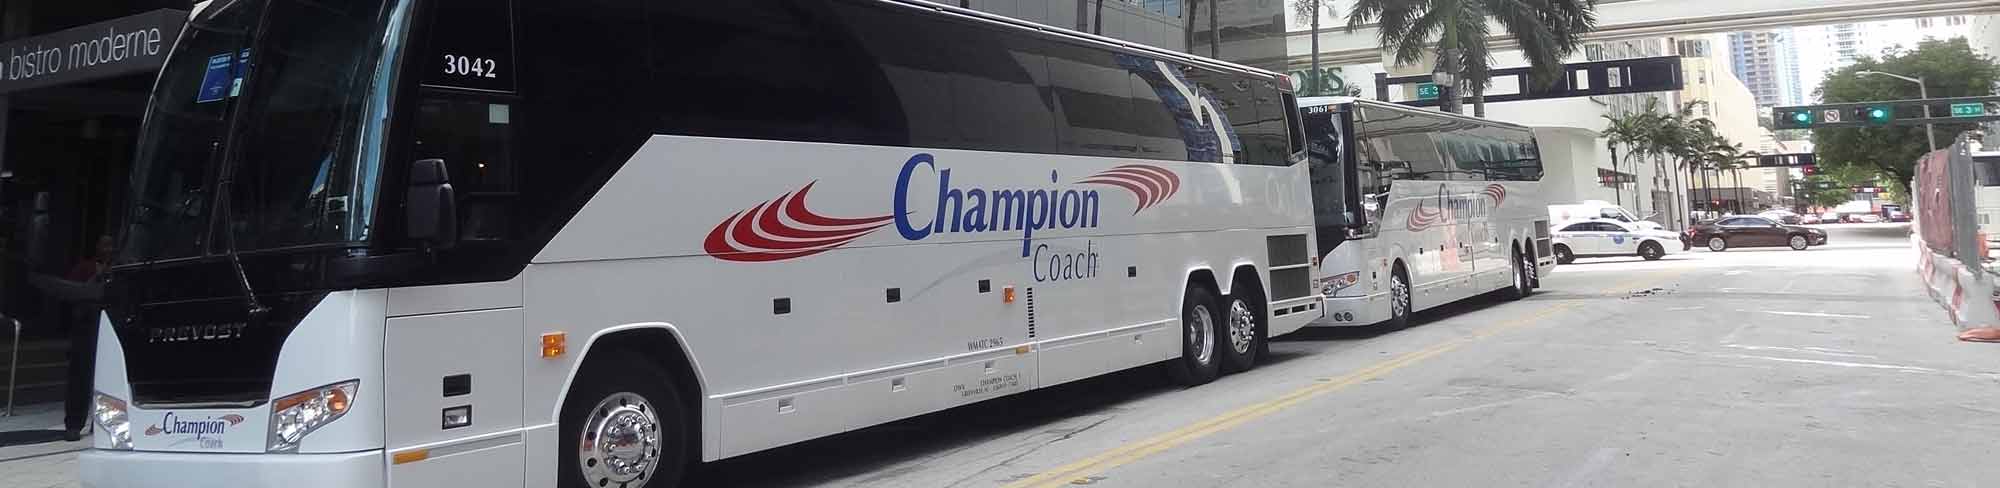 Champion Coach Group Travel